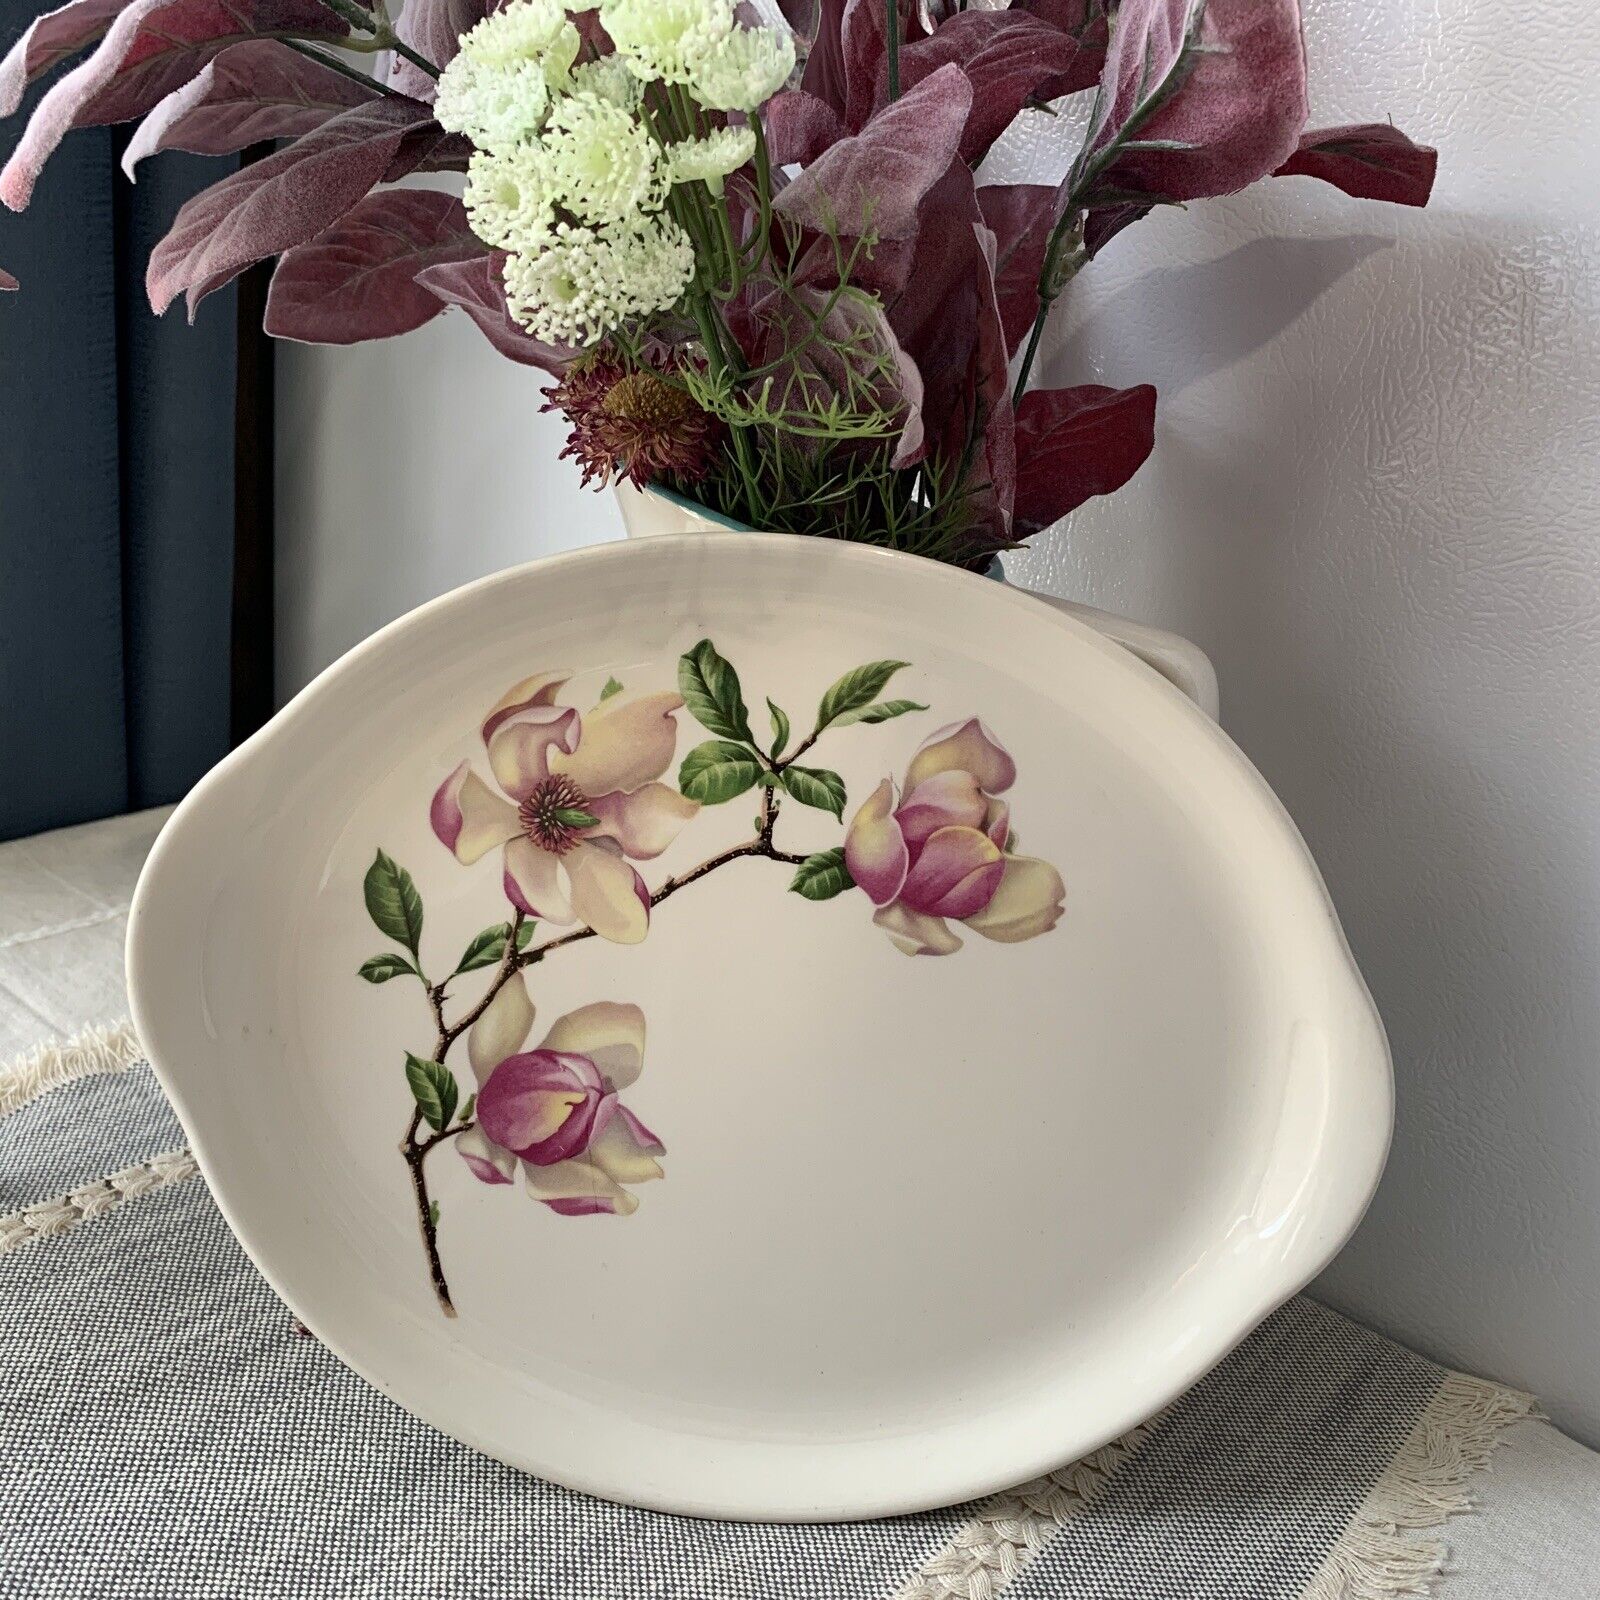 Delmar Crooksville Southern Bell Diana Magnolia Handled Ceramic Platter  11 x 9”